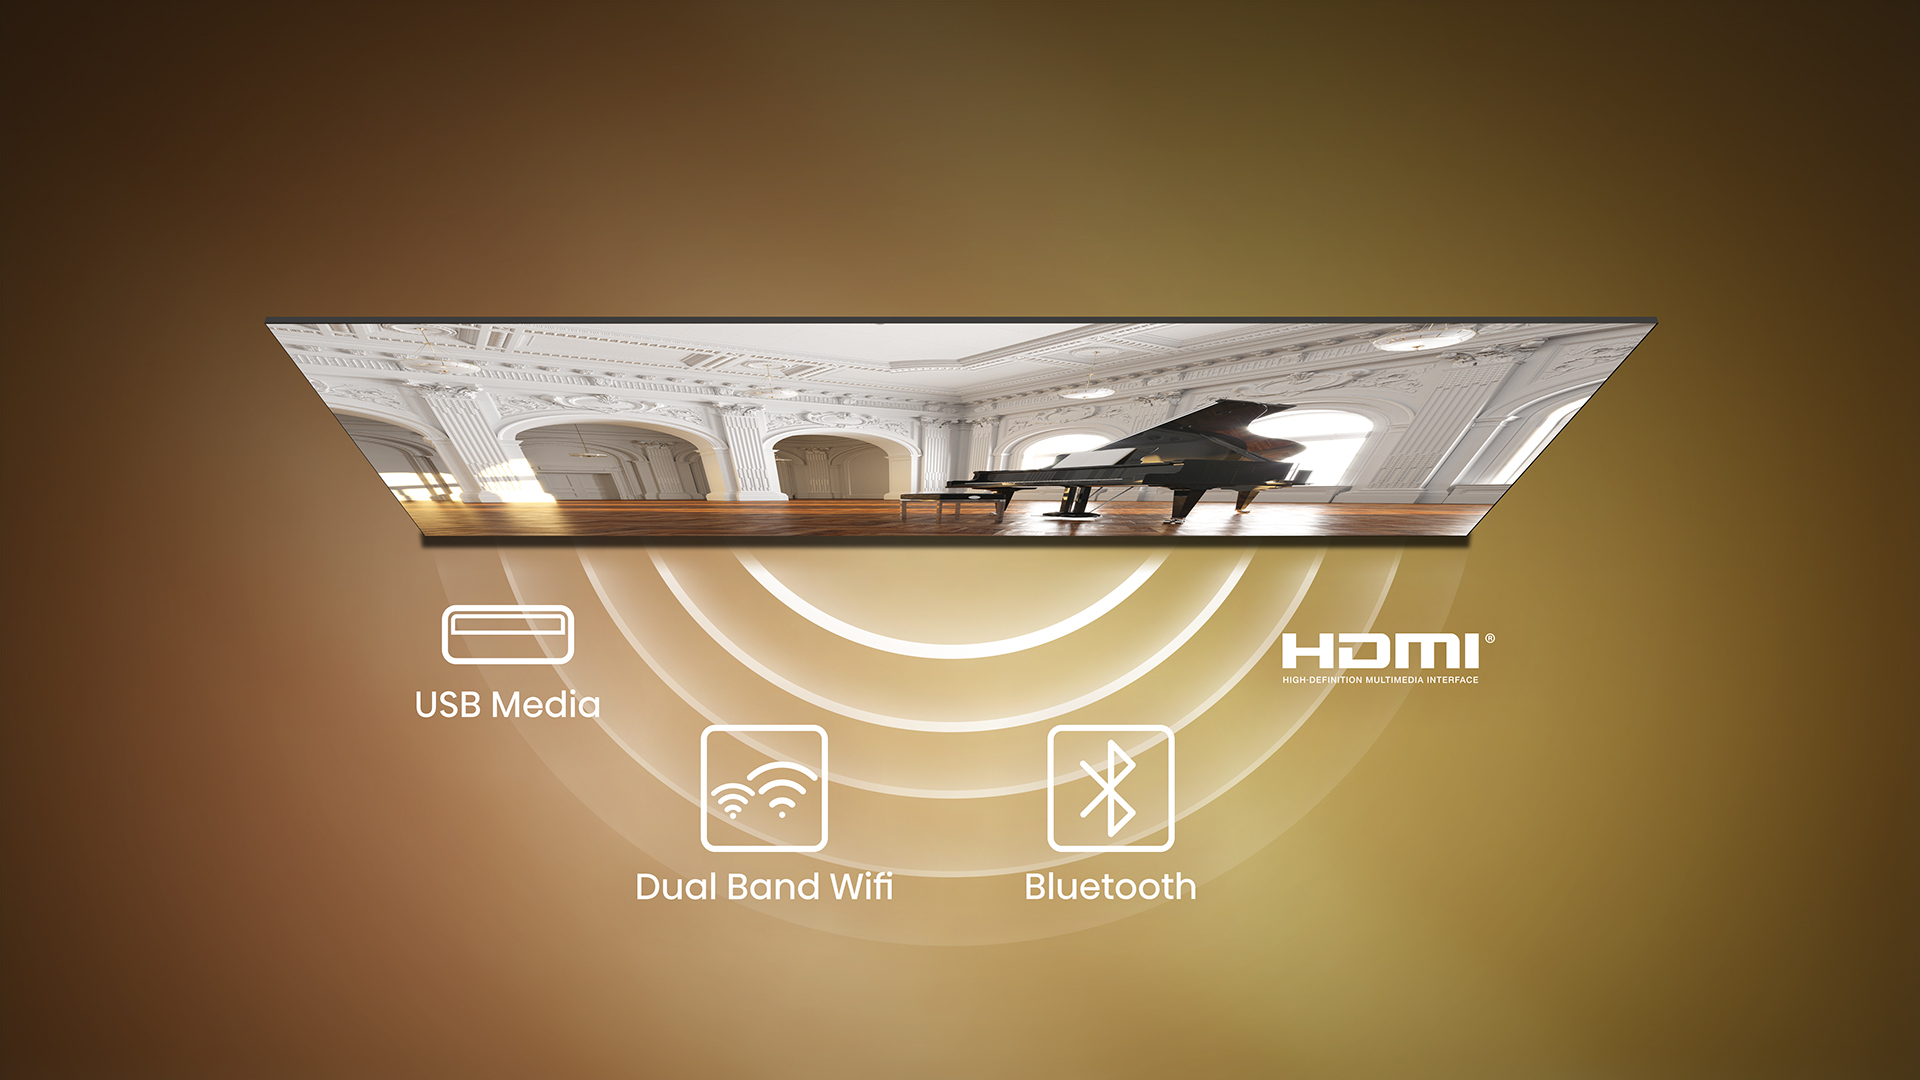 ULED TV WiFi Dual Band, puertos HDMI 2.1, ranuras USB 3.0 y 2.0, Bluetooth Hisense